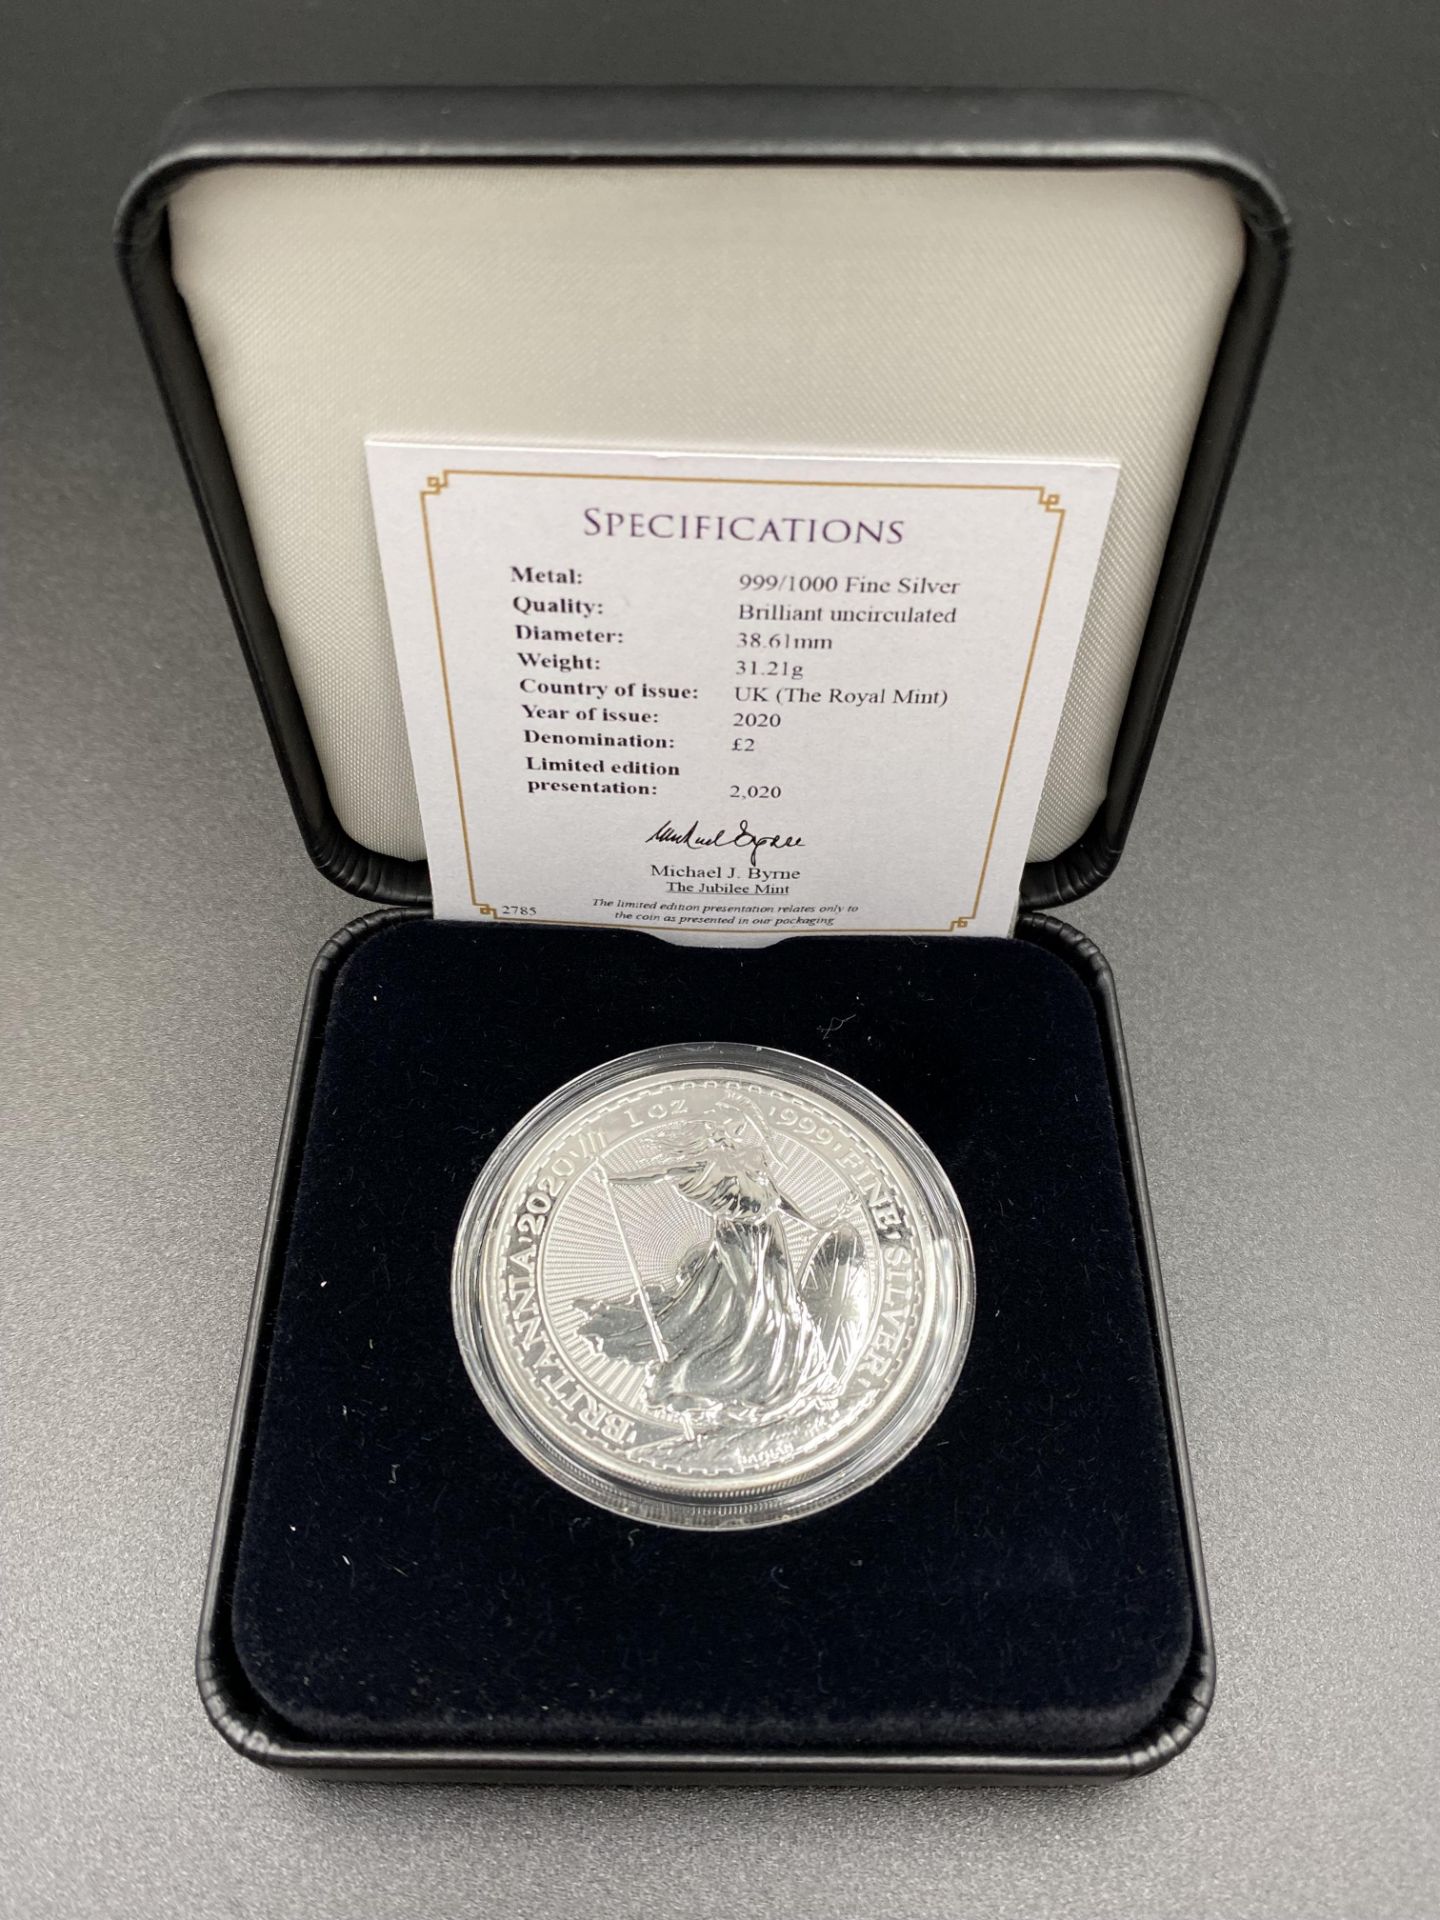 Jubilee Mint 2020 UK silver Britannia - Image 4 of 4